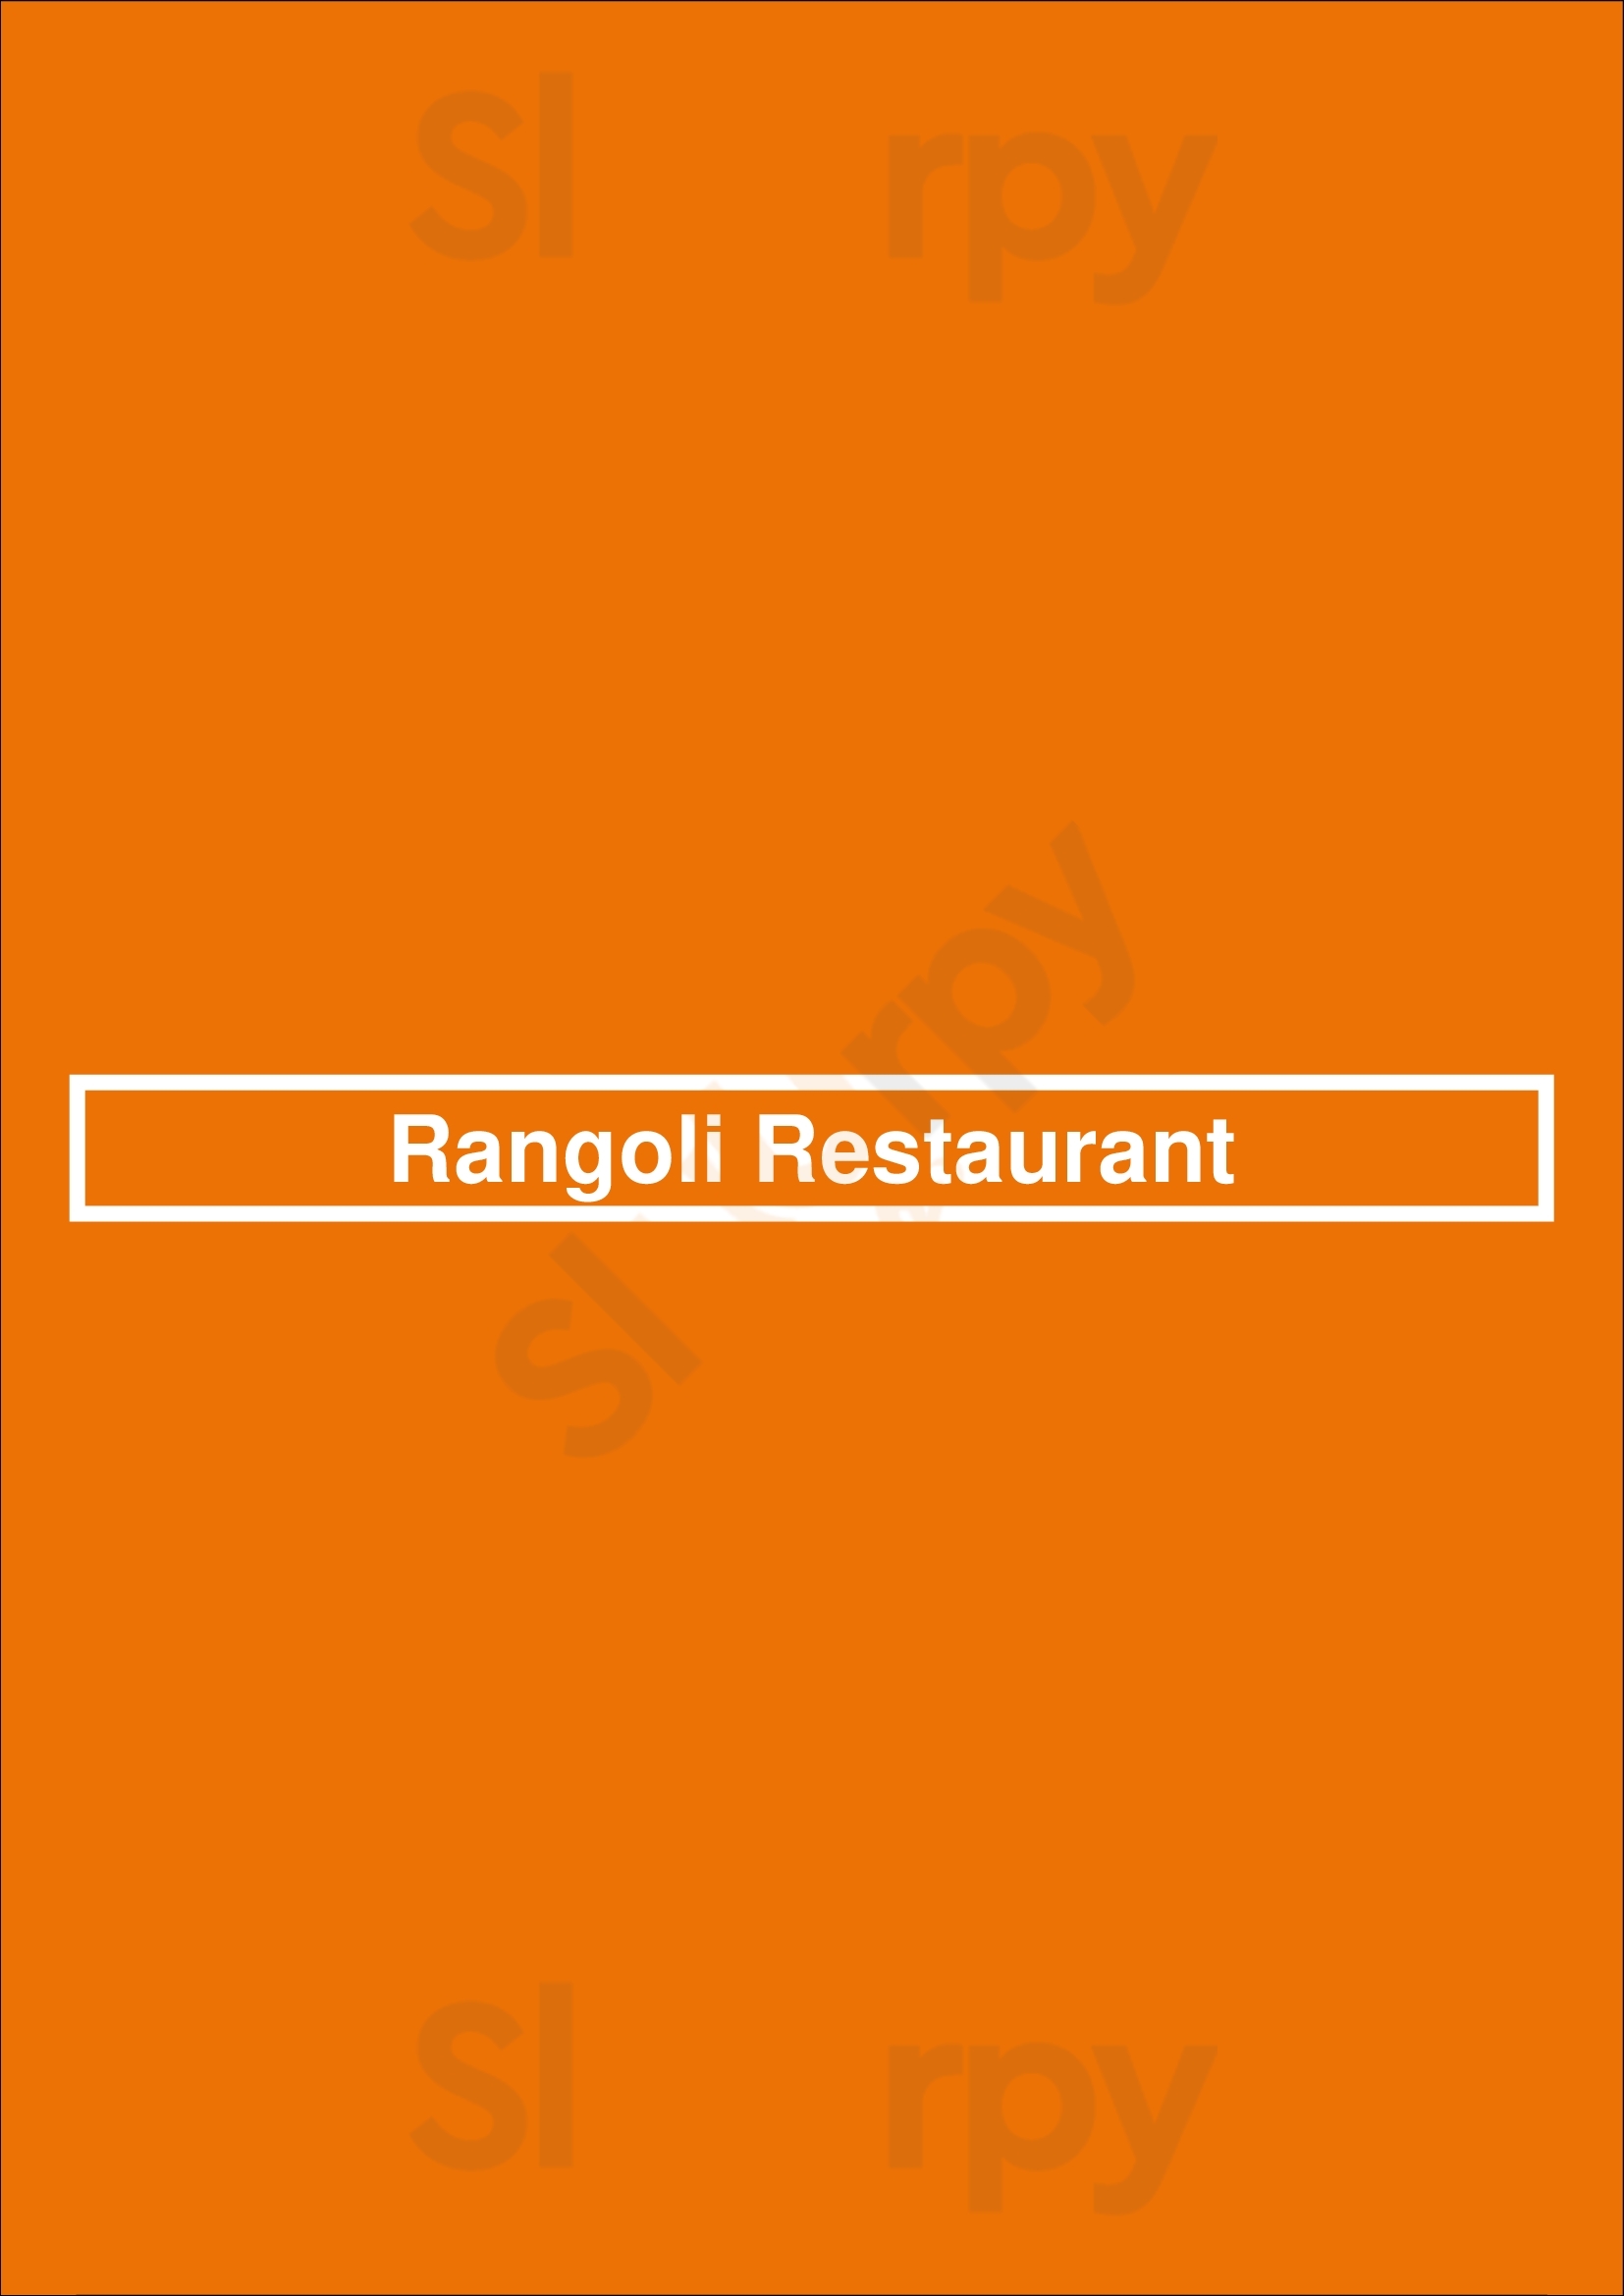 Rangoli Restaurant Amsterdam Menu - 1